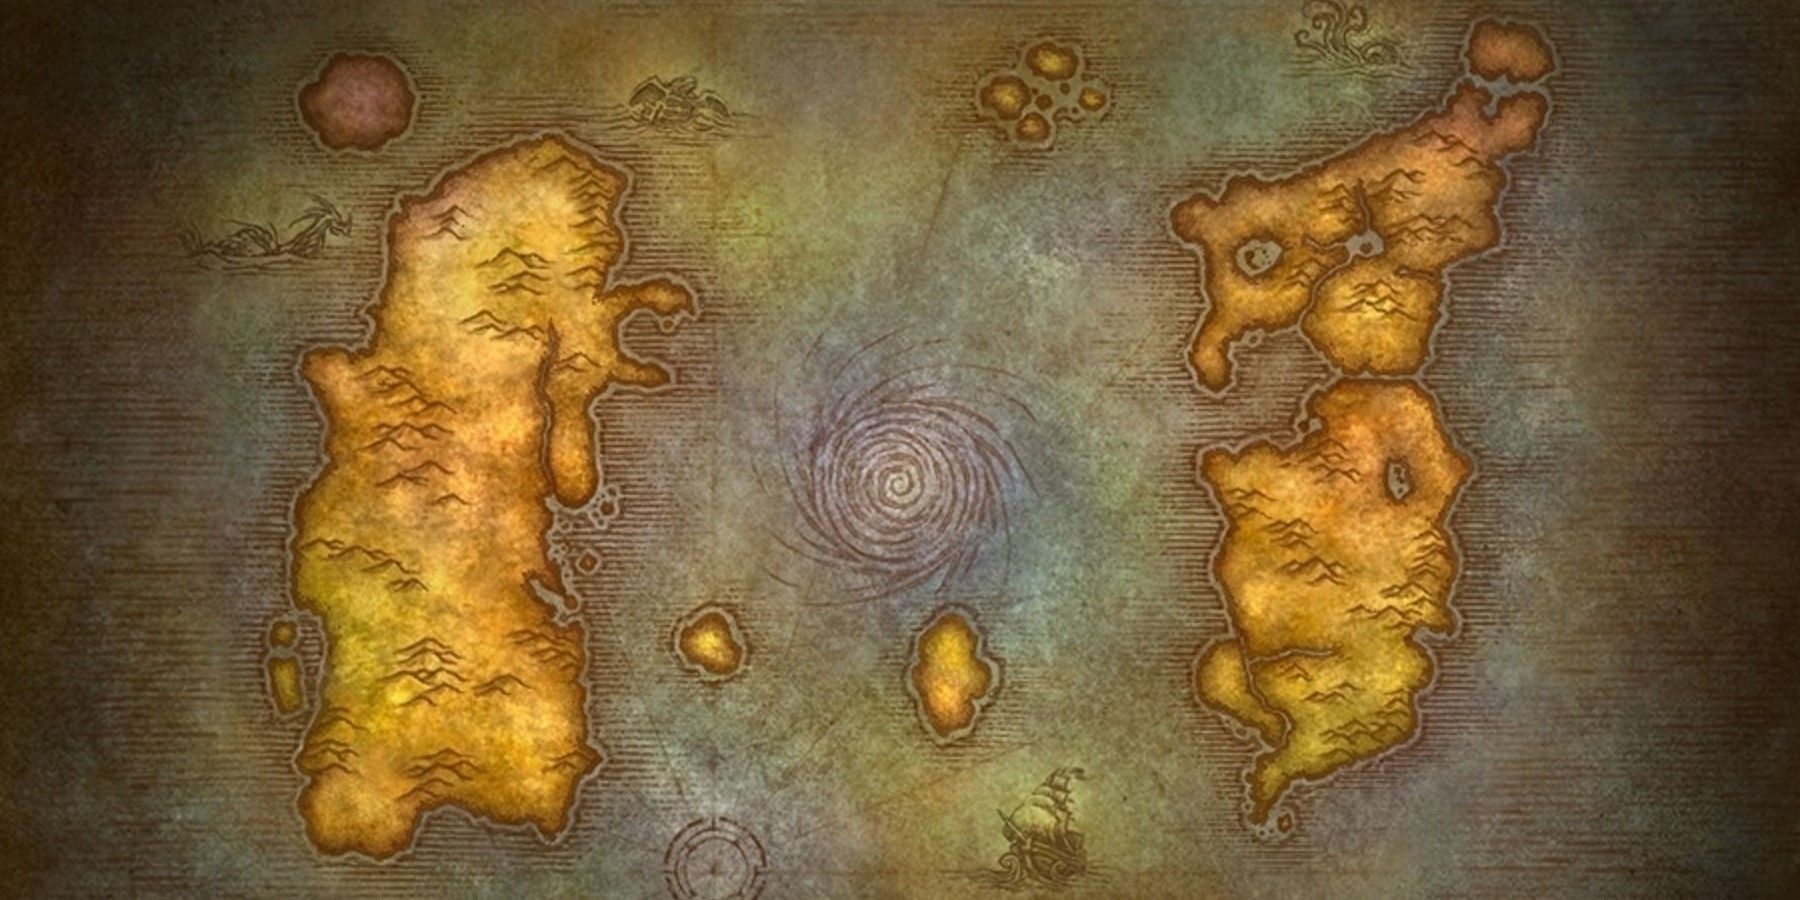 World of Warcraft Player ქმნის ევროპული ქვეყნების რუქას WOW კლასიკური სტილით